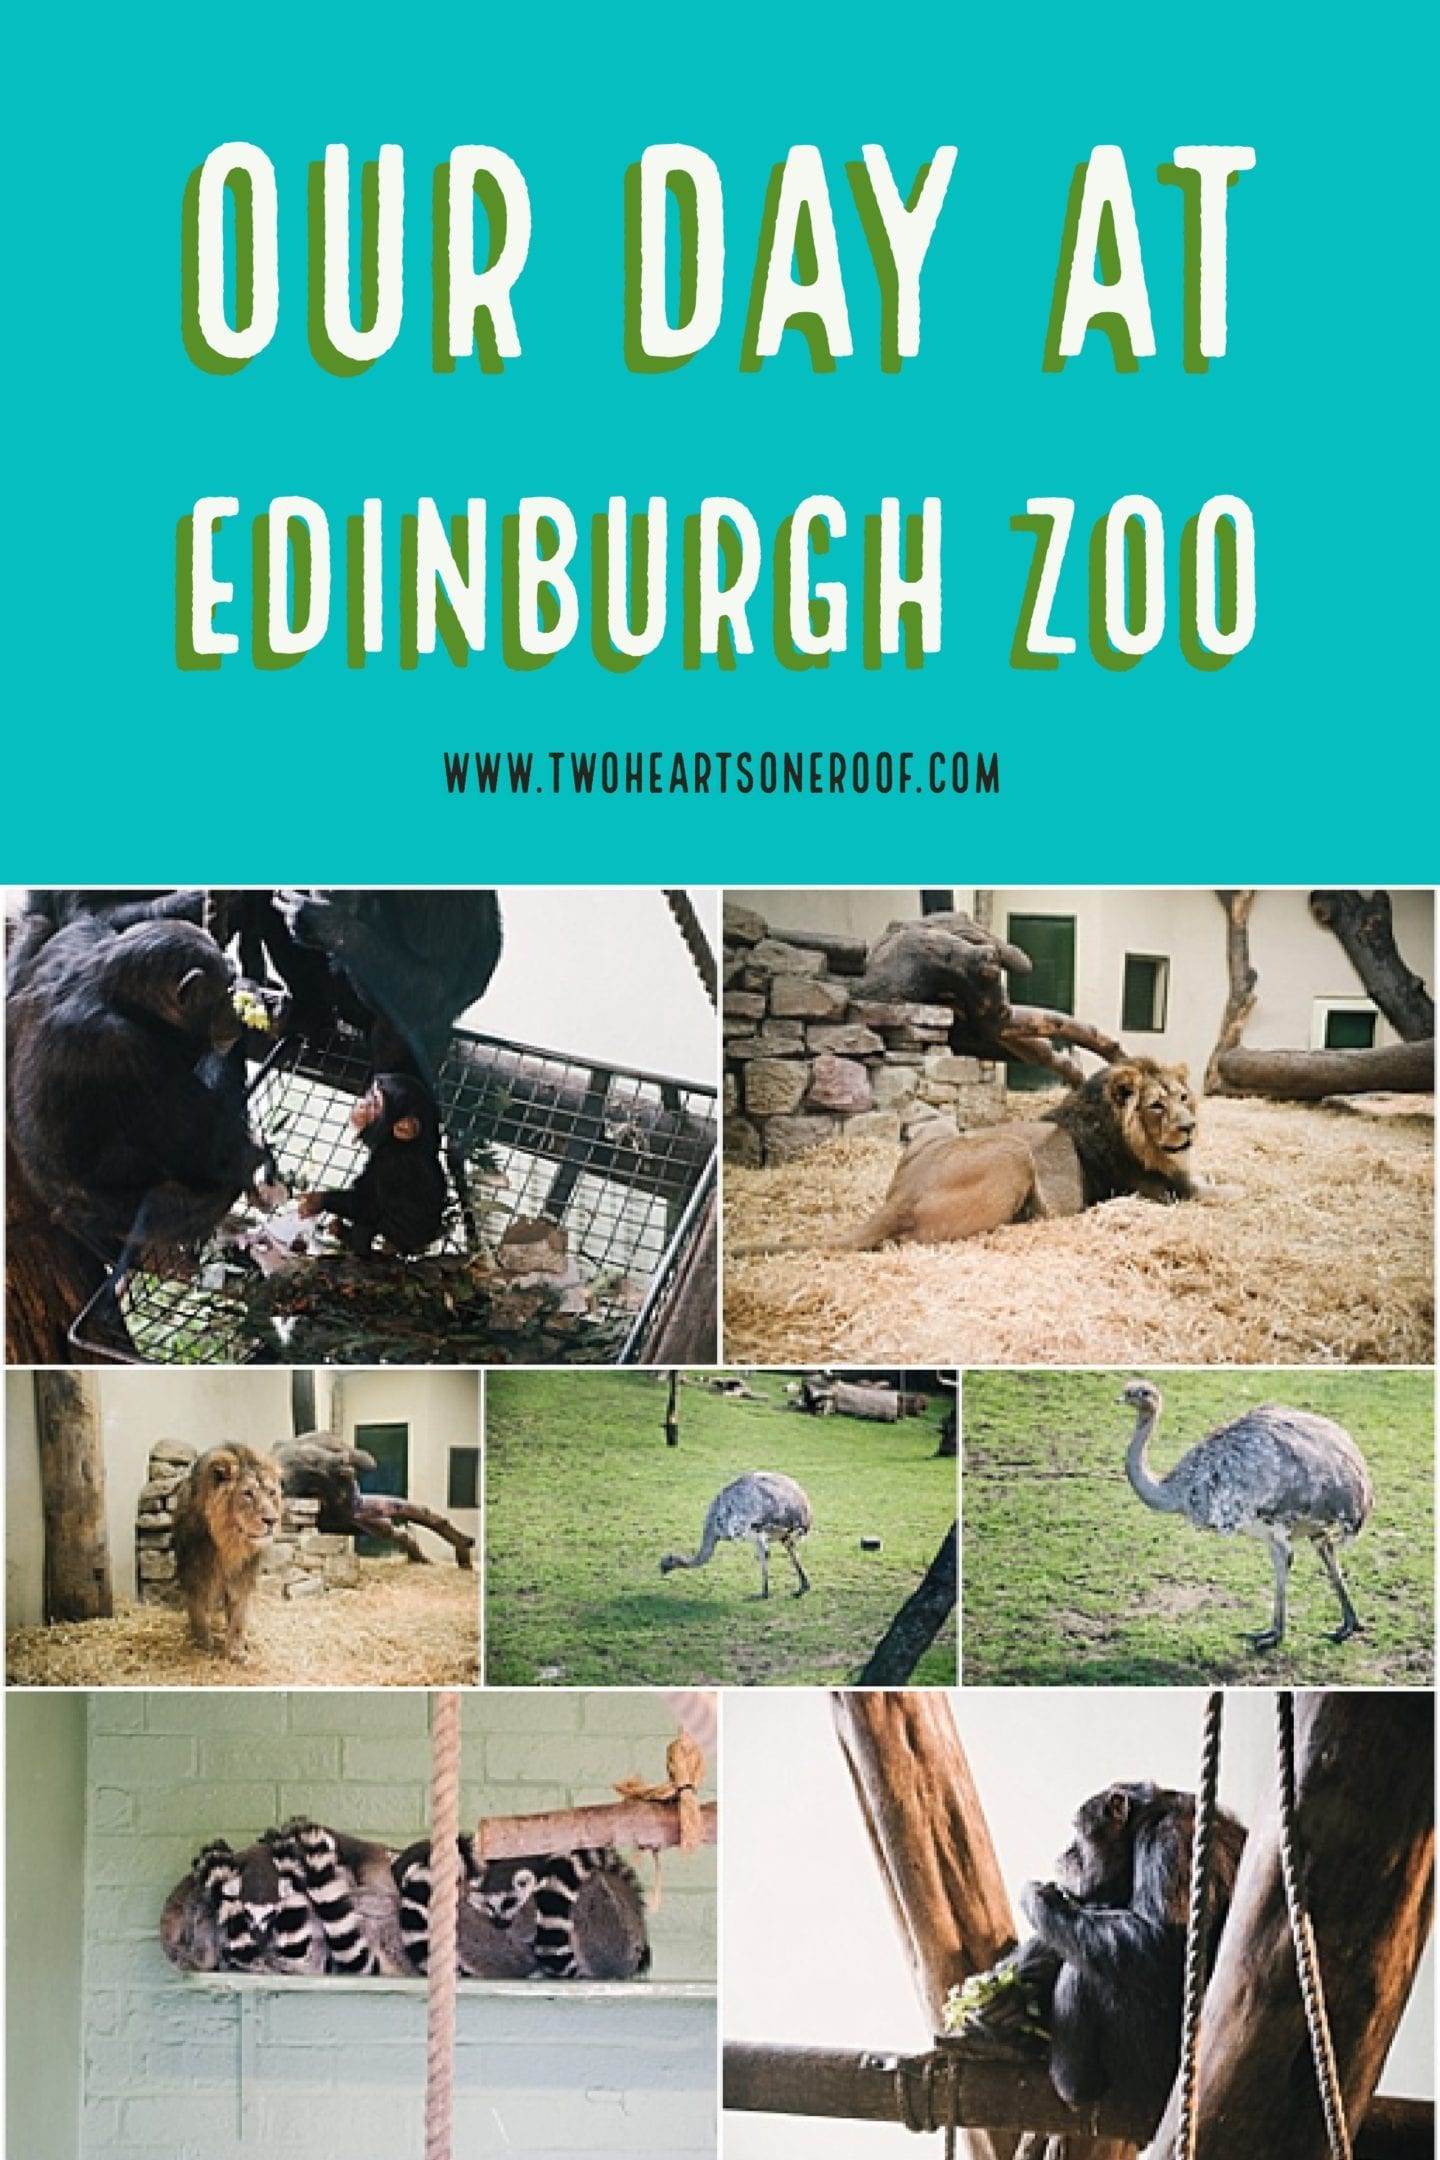 Our Day at Edinburgh Zoo